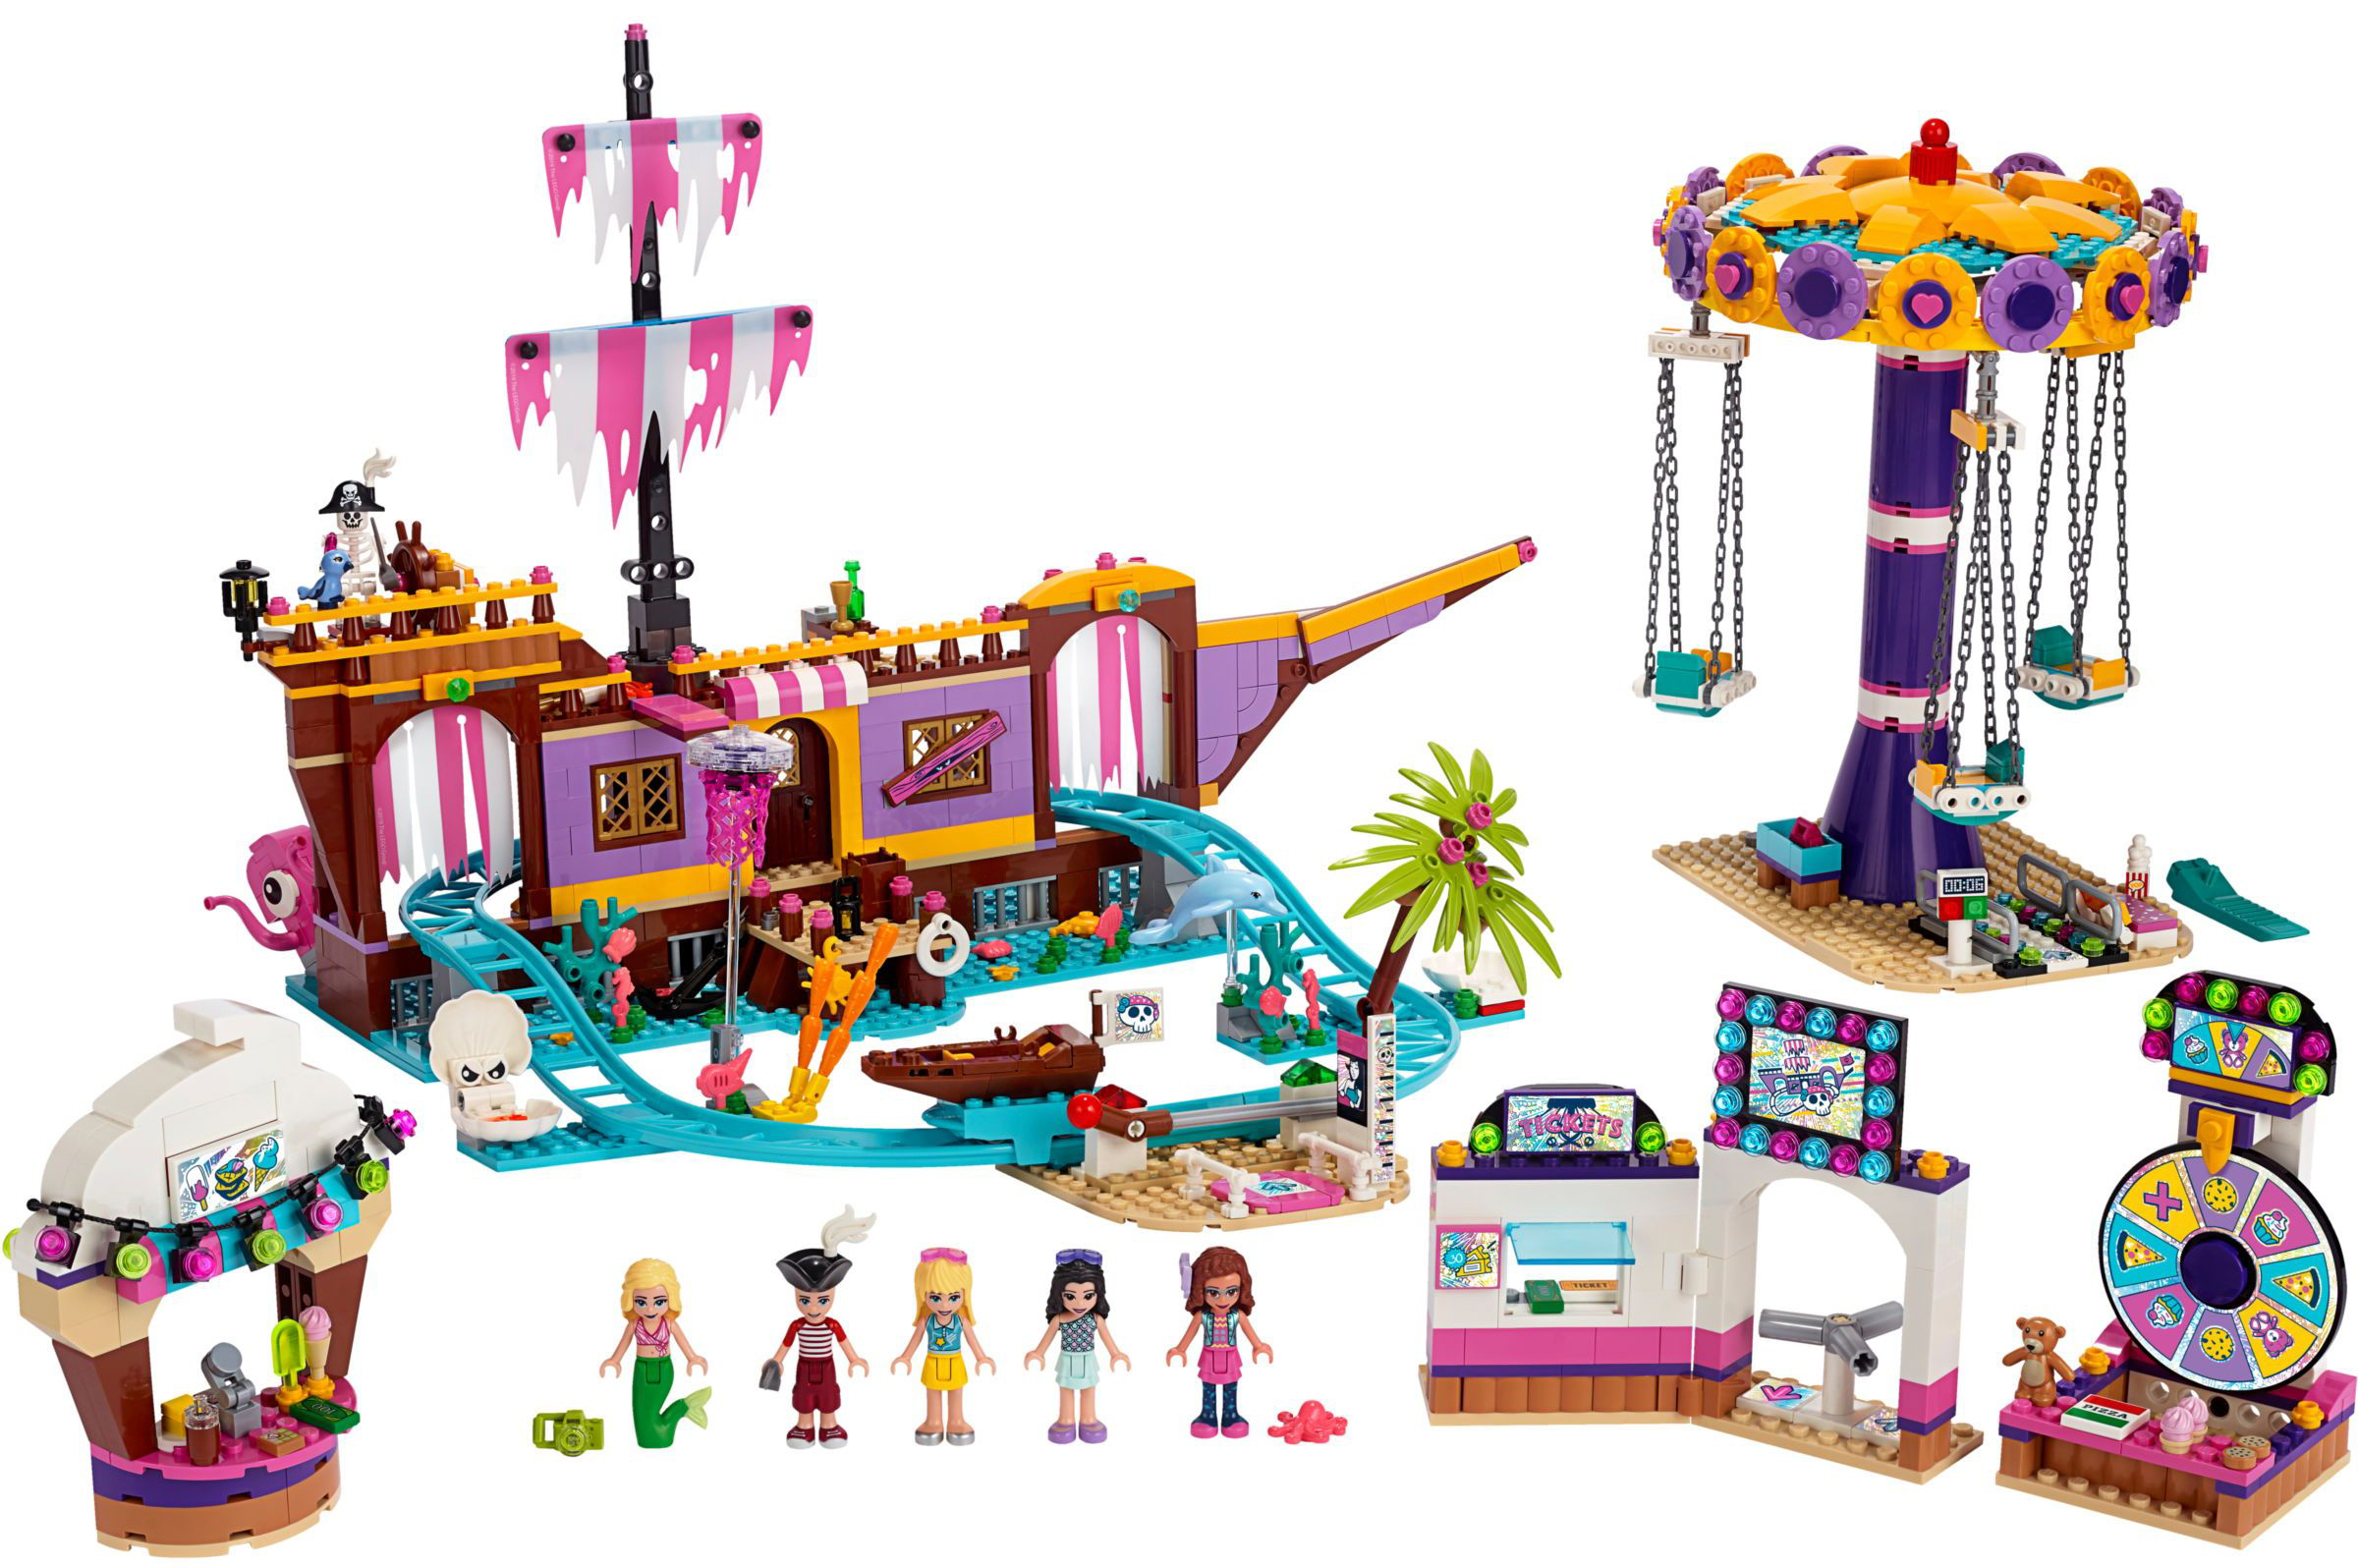 New LEGO Friends Summer Set Revealed | BricksFanz